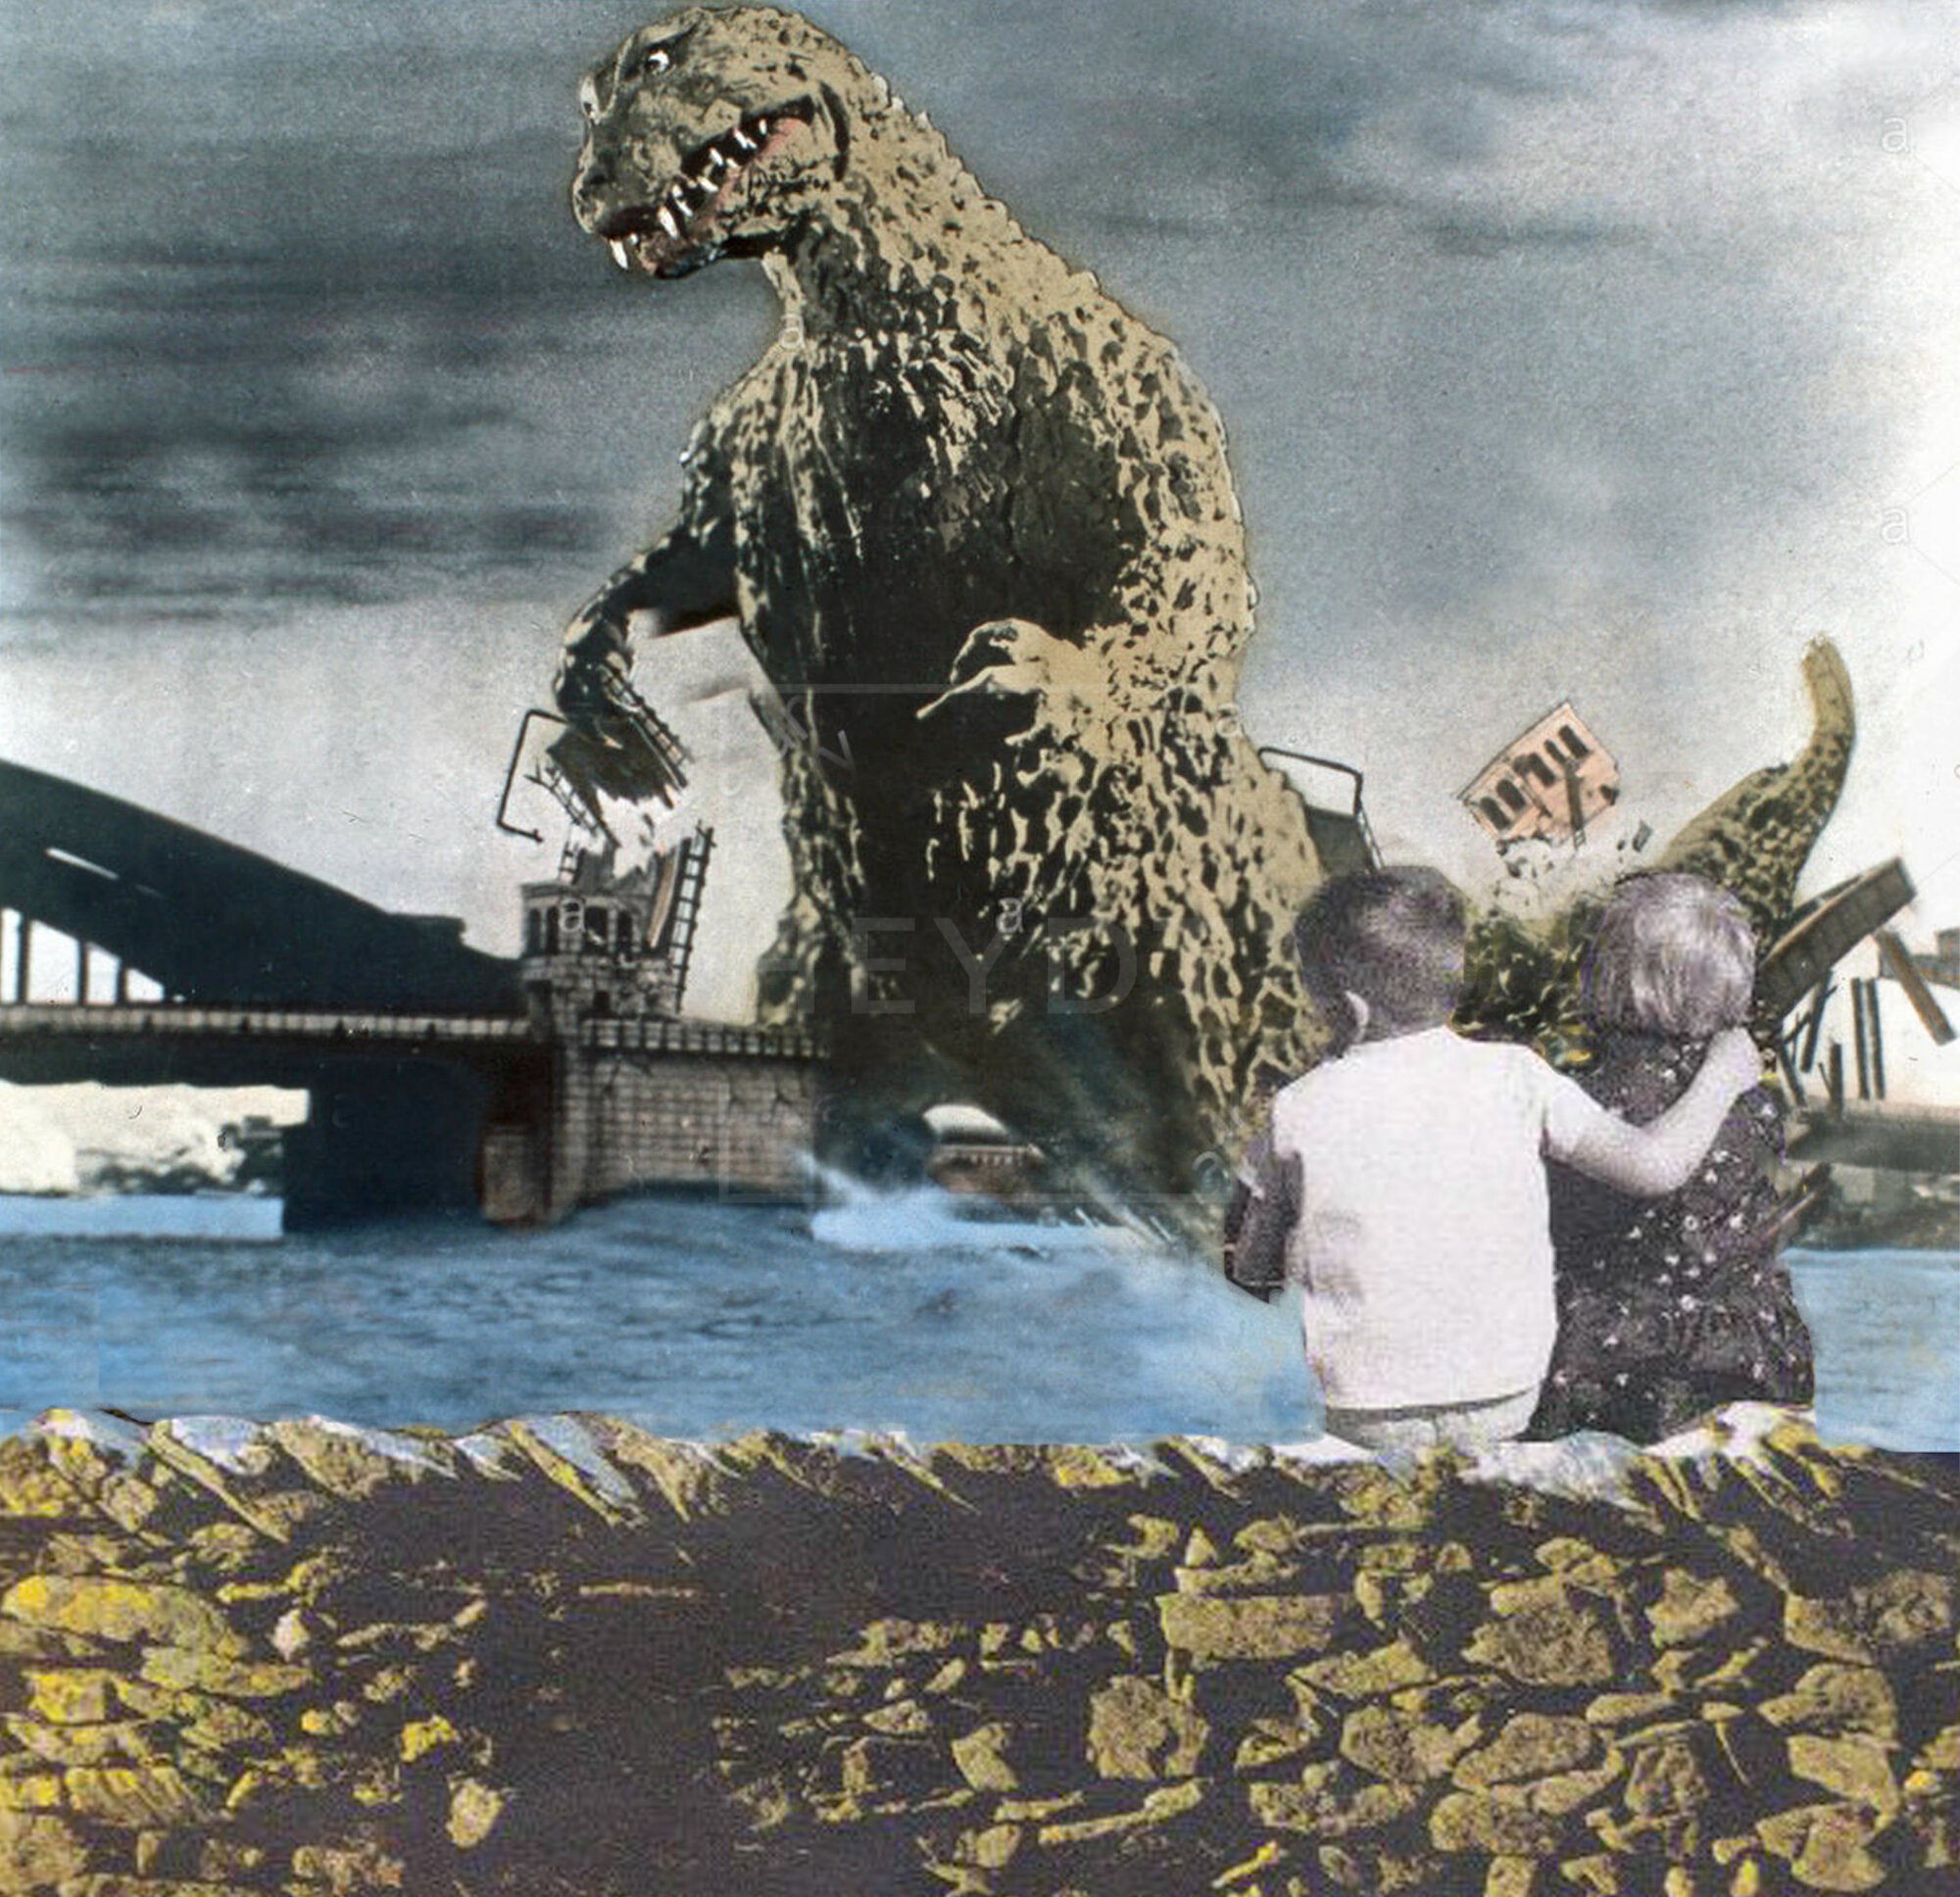 ViewfromtheWall-Godzilla-HEYDT-2020-RecycledMedia.jpg